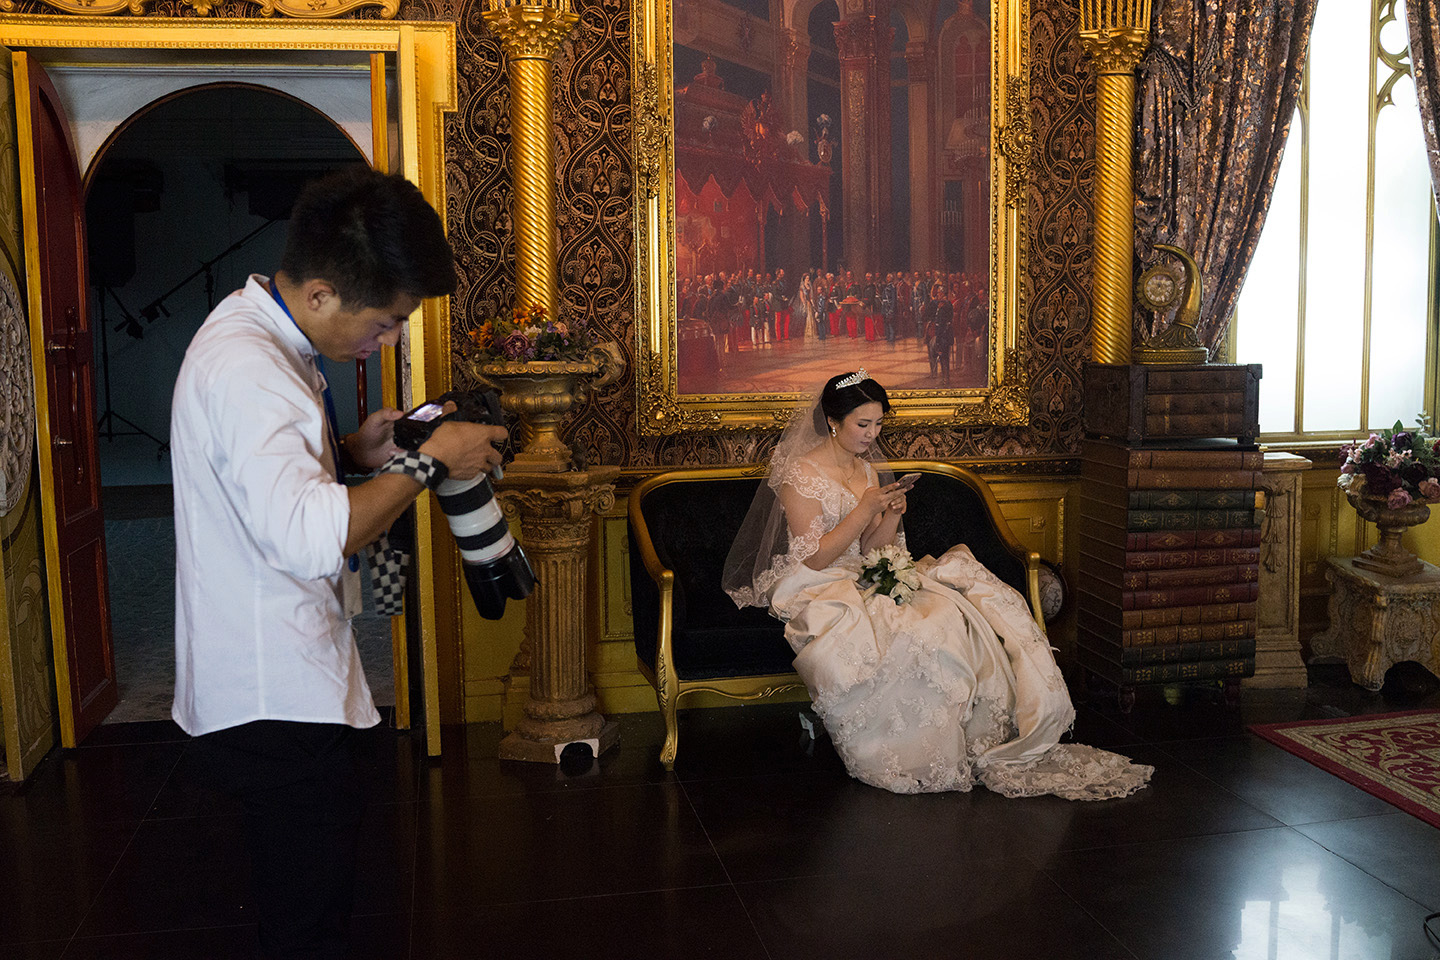 Chinese Wedding Photos series